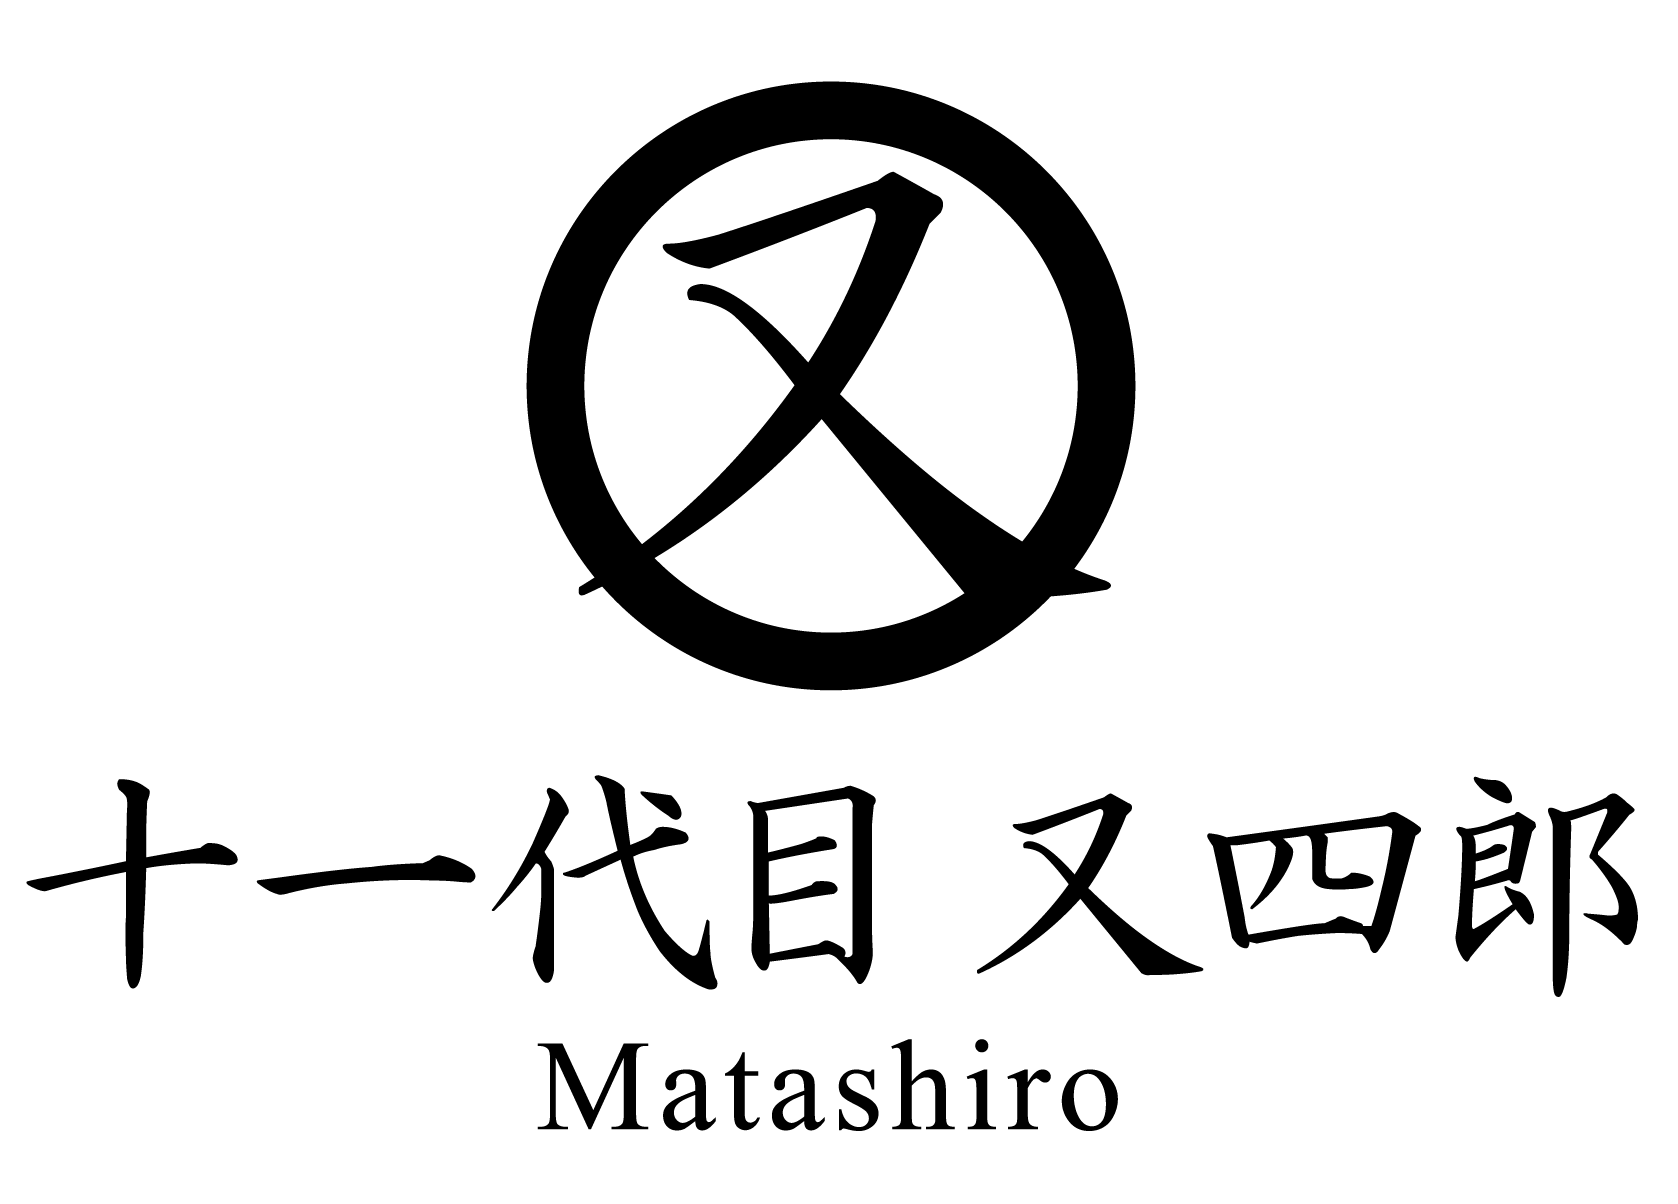 十一代目又四郎　- matashiro -